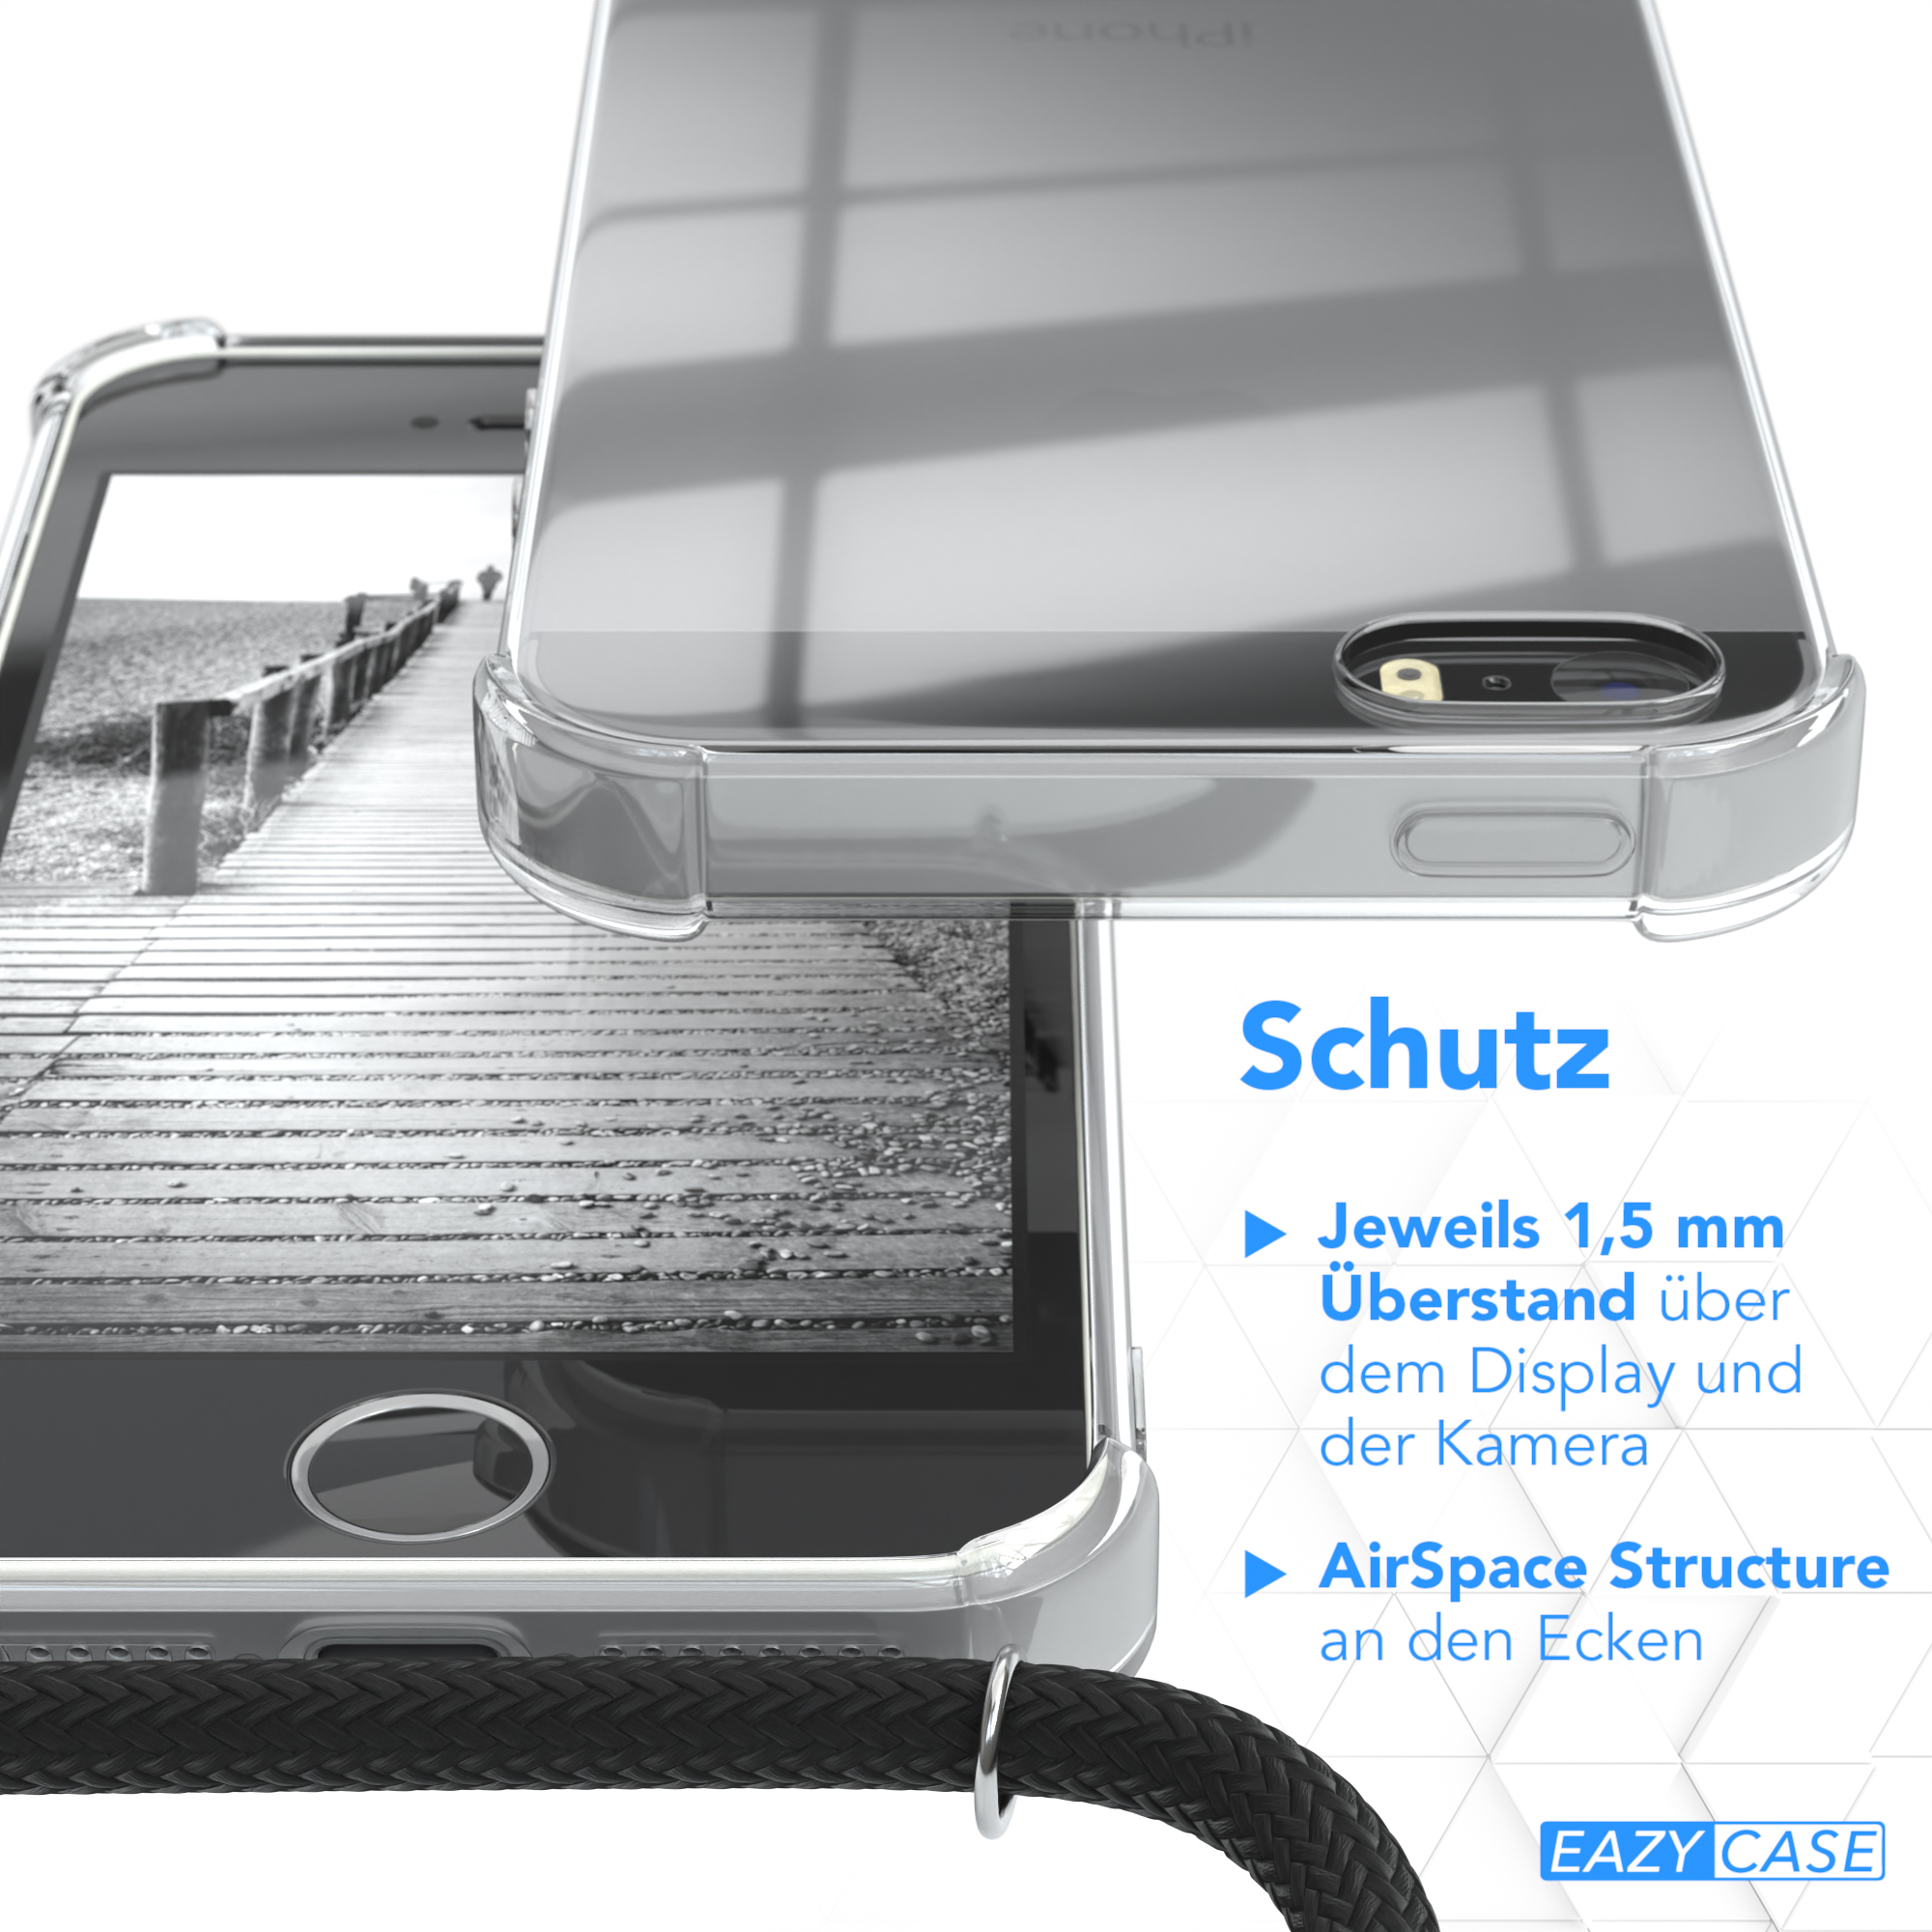 iPhone 5 SE Handykette extra + Metall Umhängetasche, 2016, / Kordel 5S, CASE Schwarz, Gold iPhone EAZY Apple,